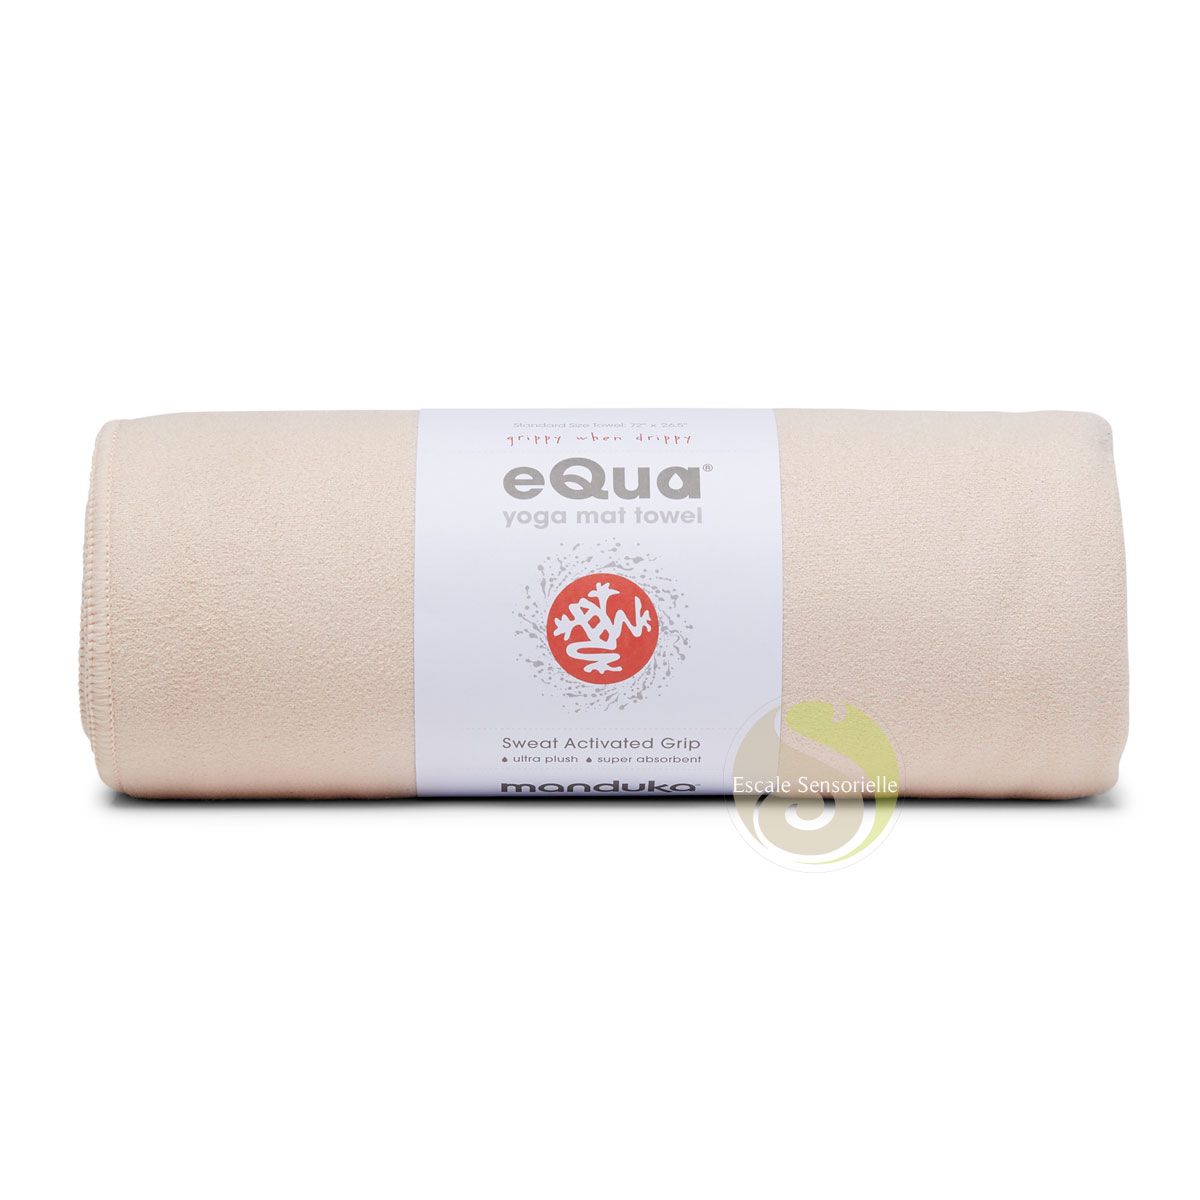 Serviette pour tapis de yoga absorbante microfibre douce Manduka morganite